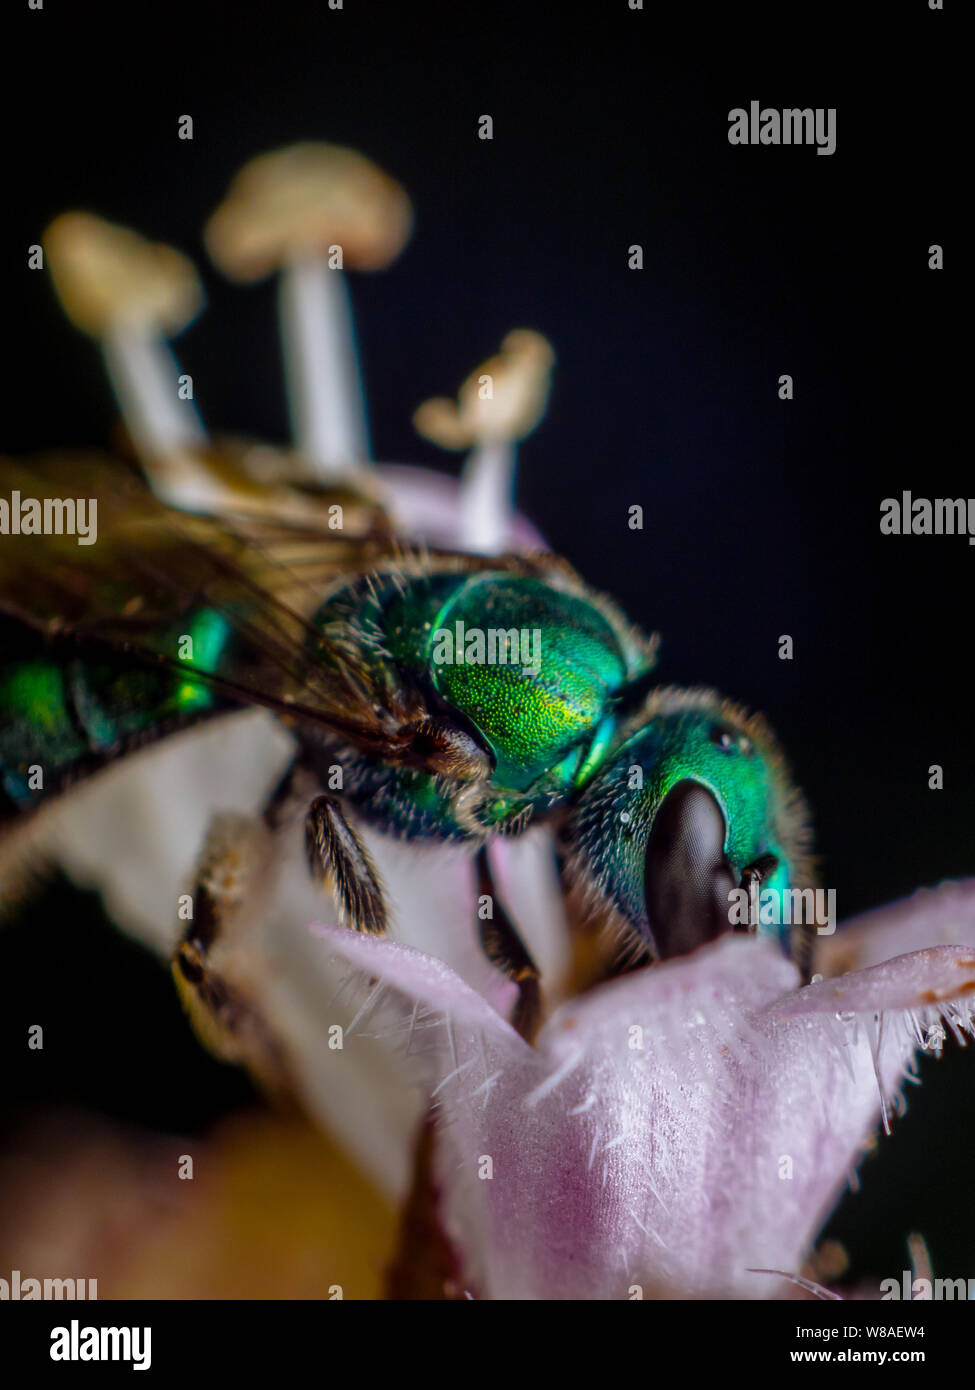 Sudor abeja fotografías e imágenes de alta resolución - Alamy